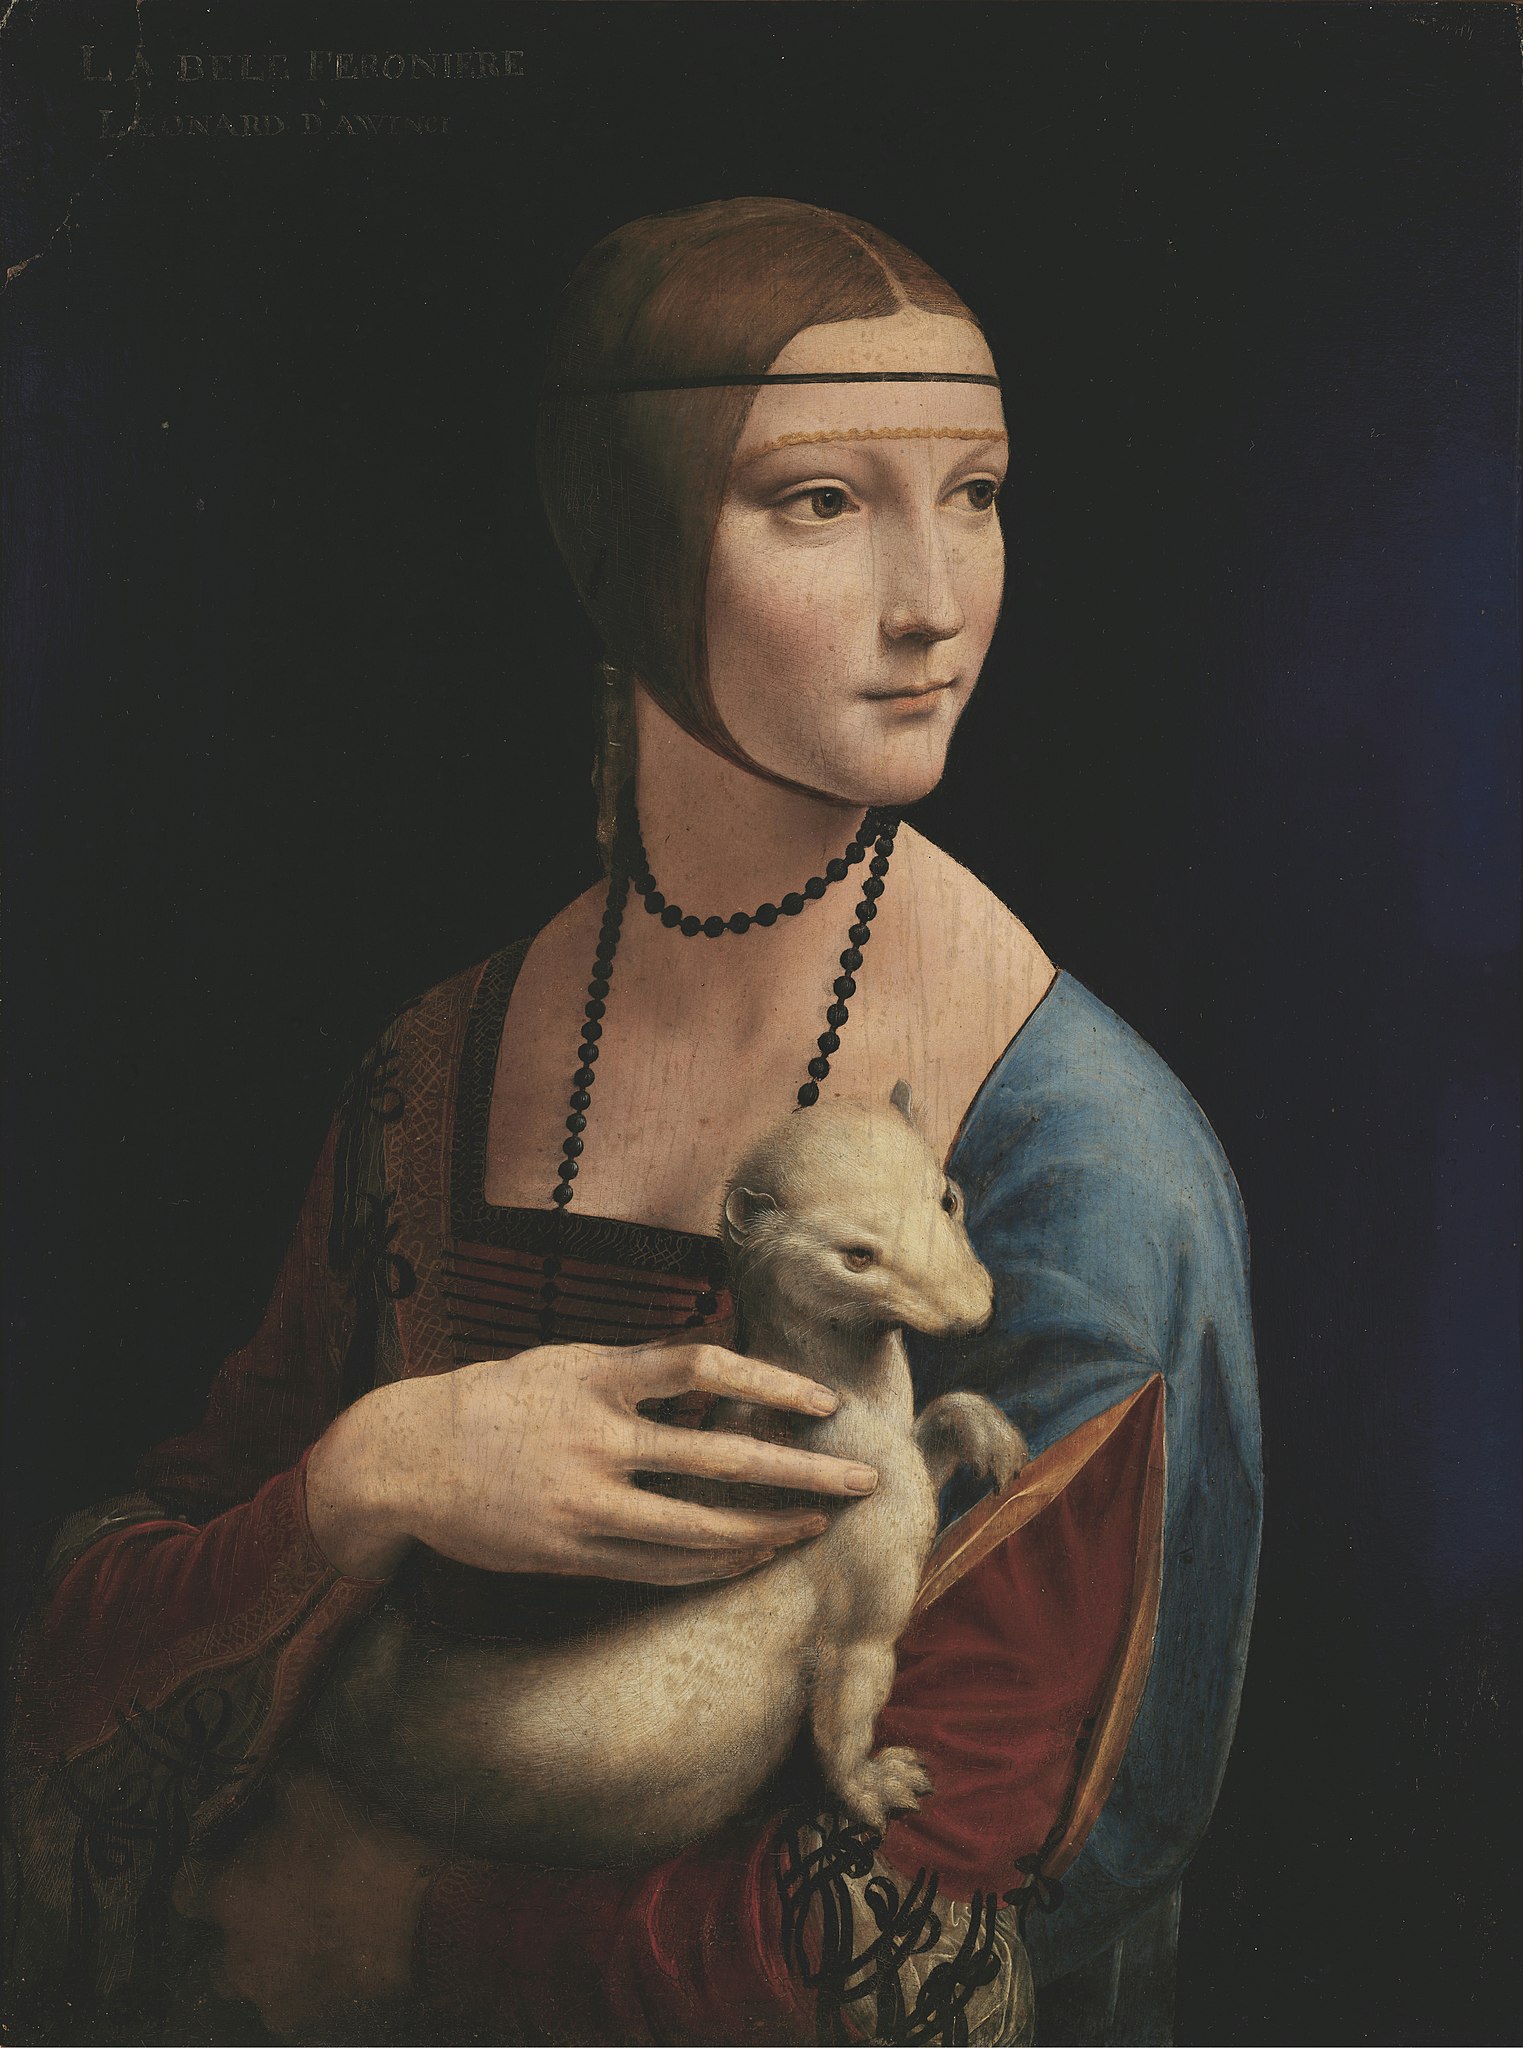 Lady with an Ermine by Leonardo da Vinci - circa 1490 - 54 x 39 cm National Museum in Krakow